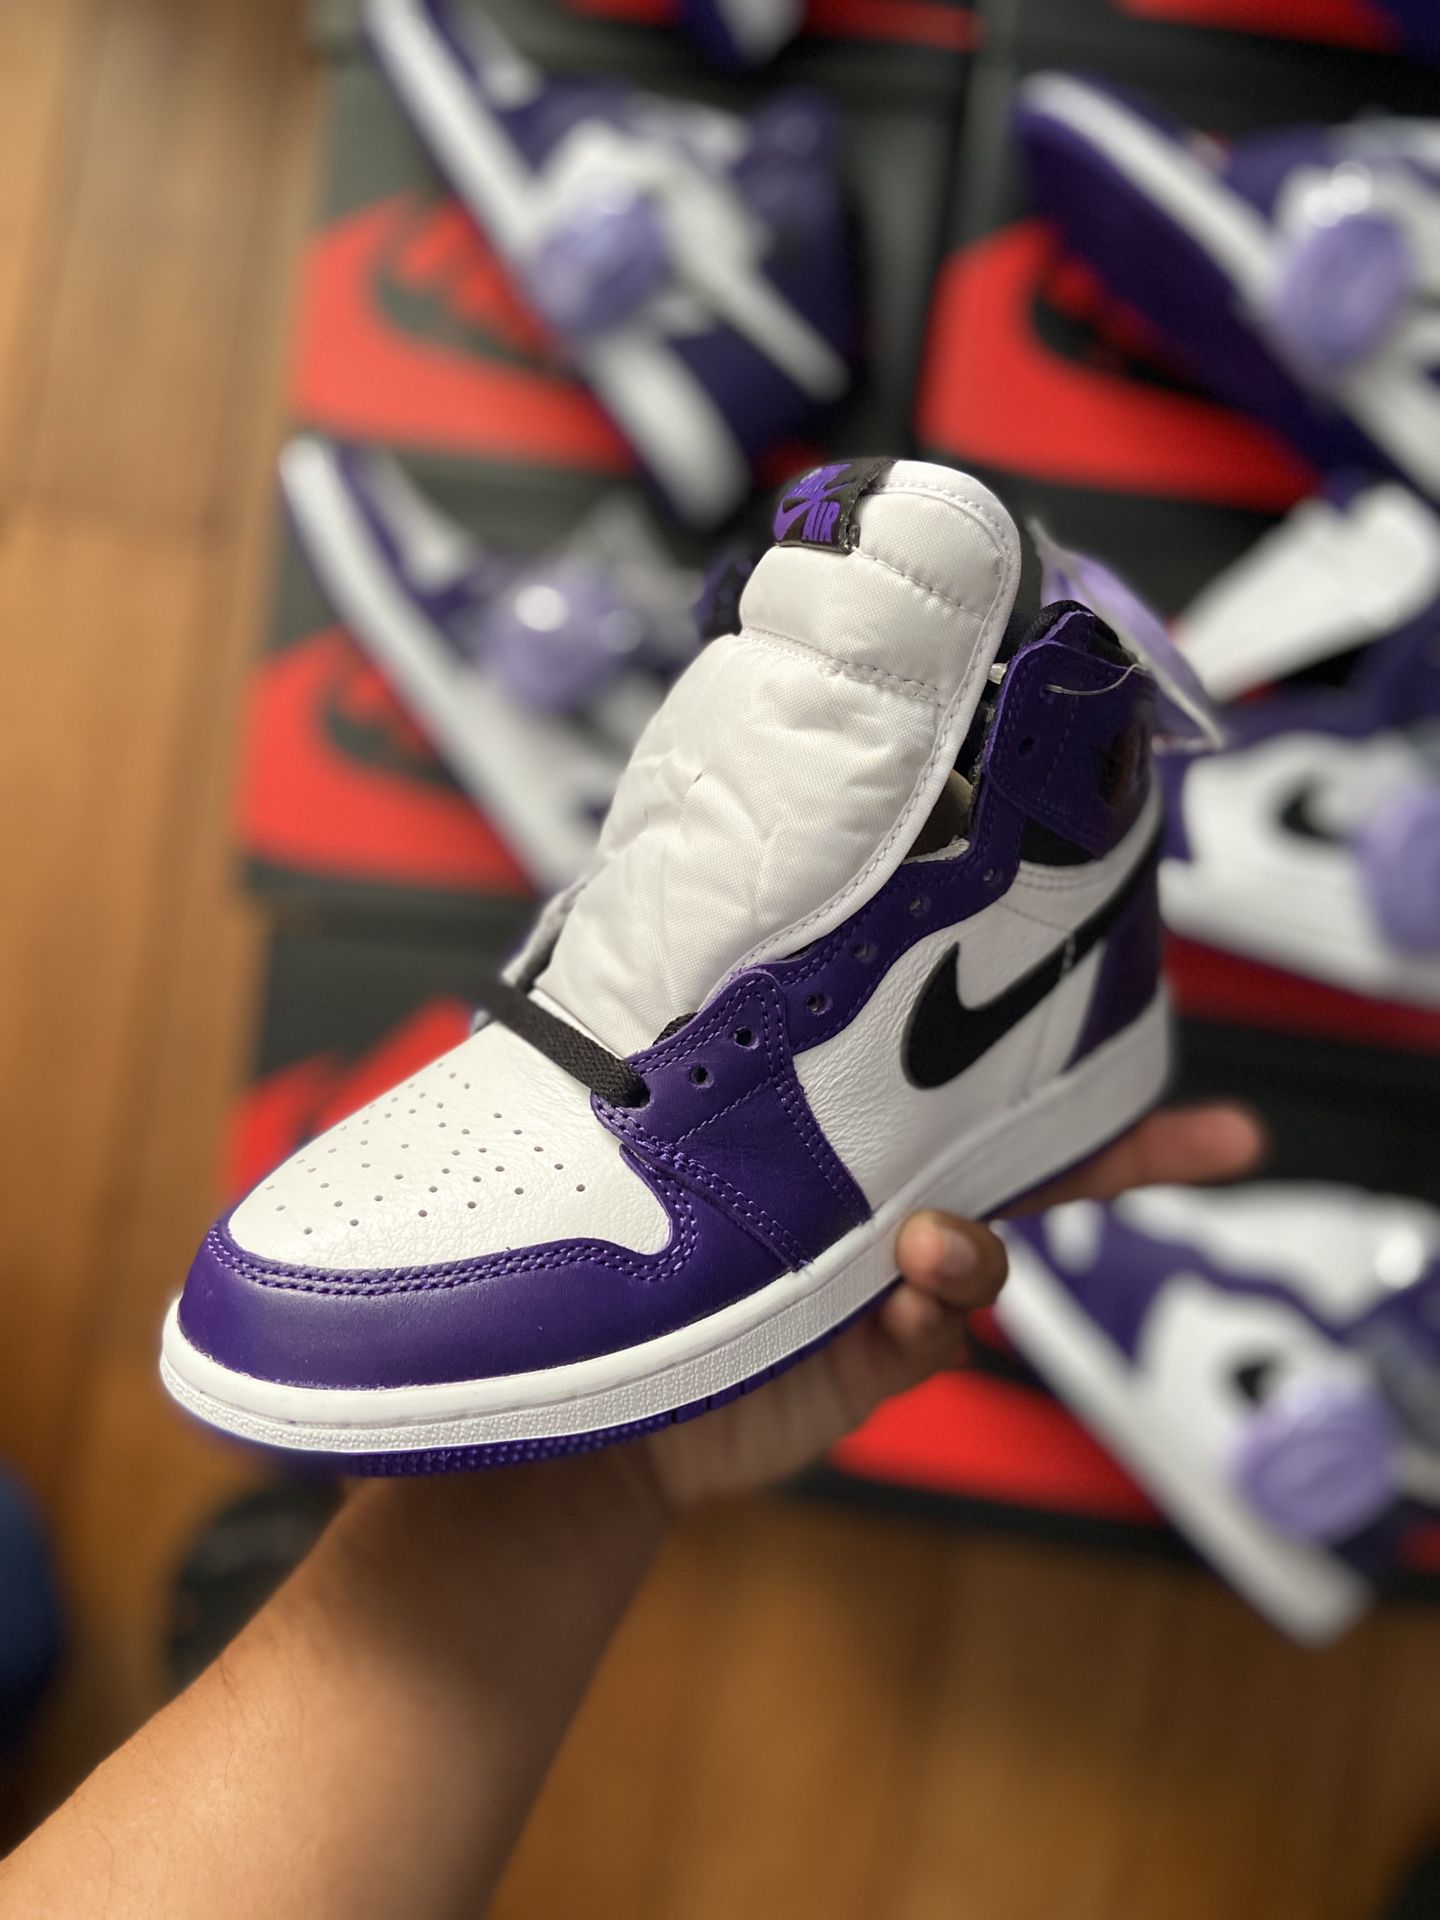 Jordan 1 Court Purple GS size 4.5y and 7y